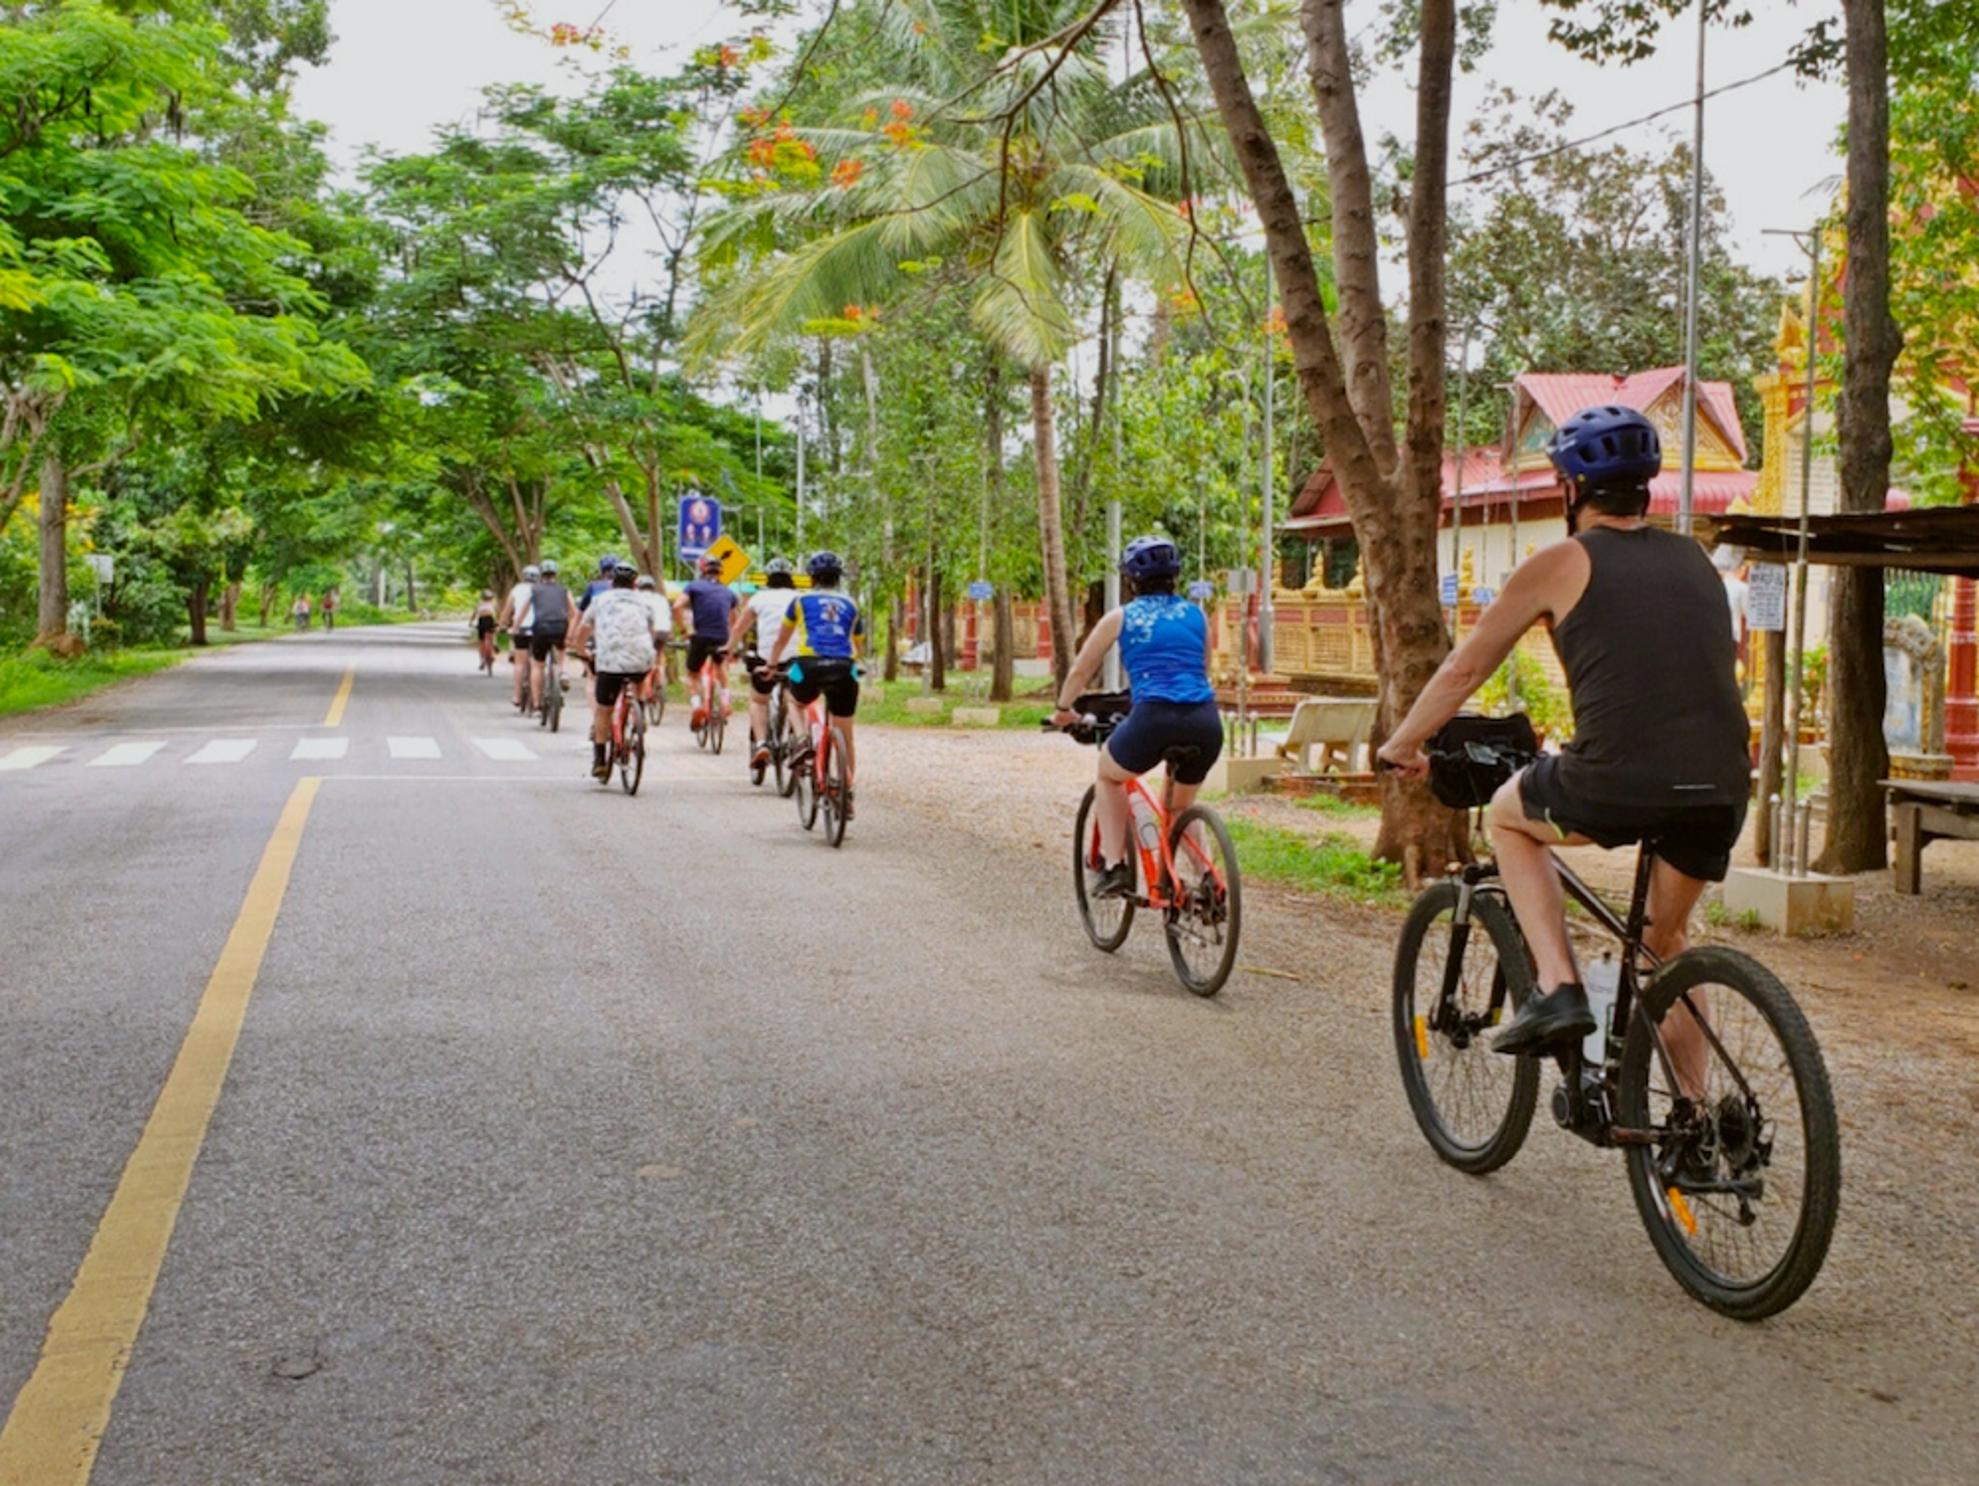 Cyclists ride through village Battambang